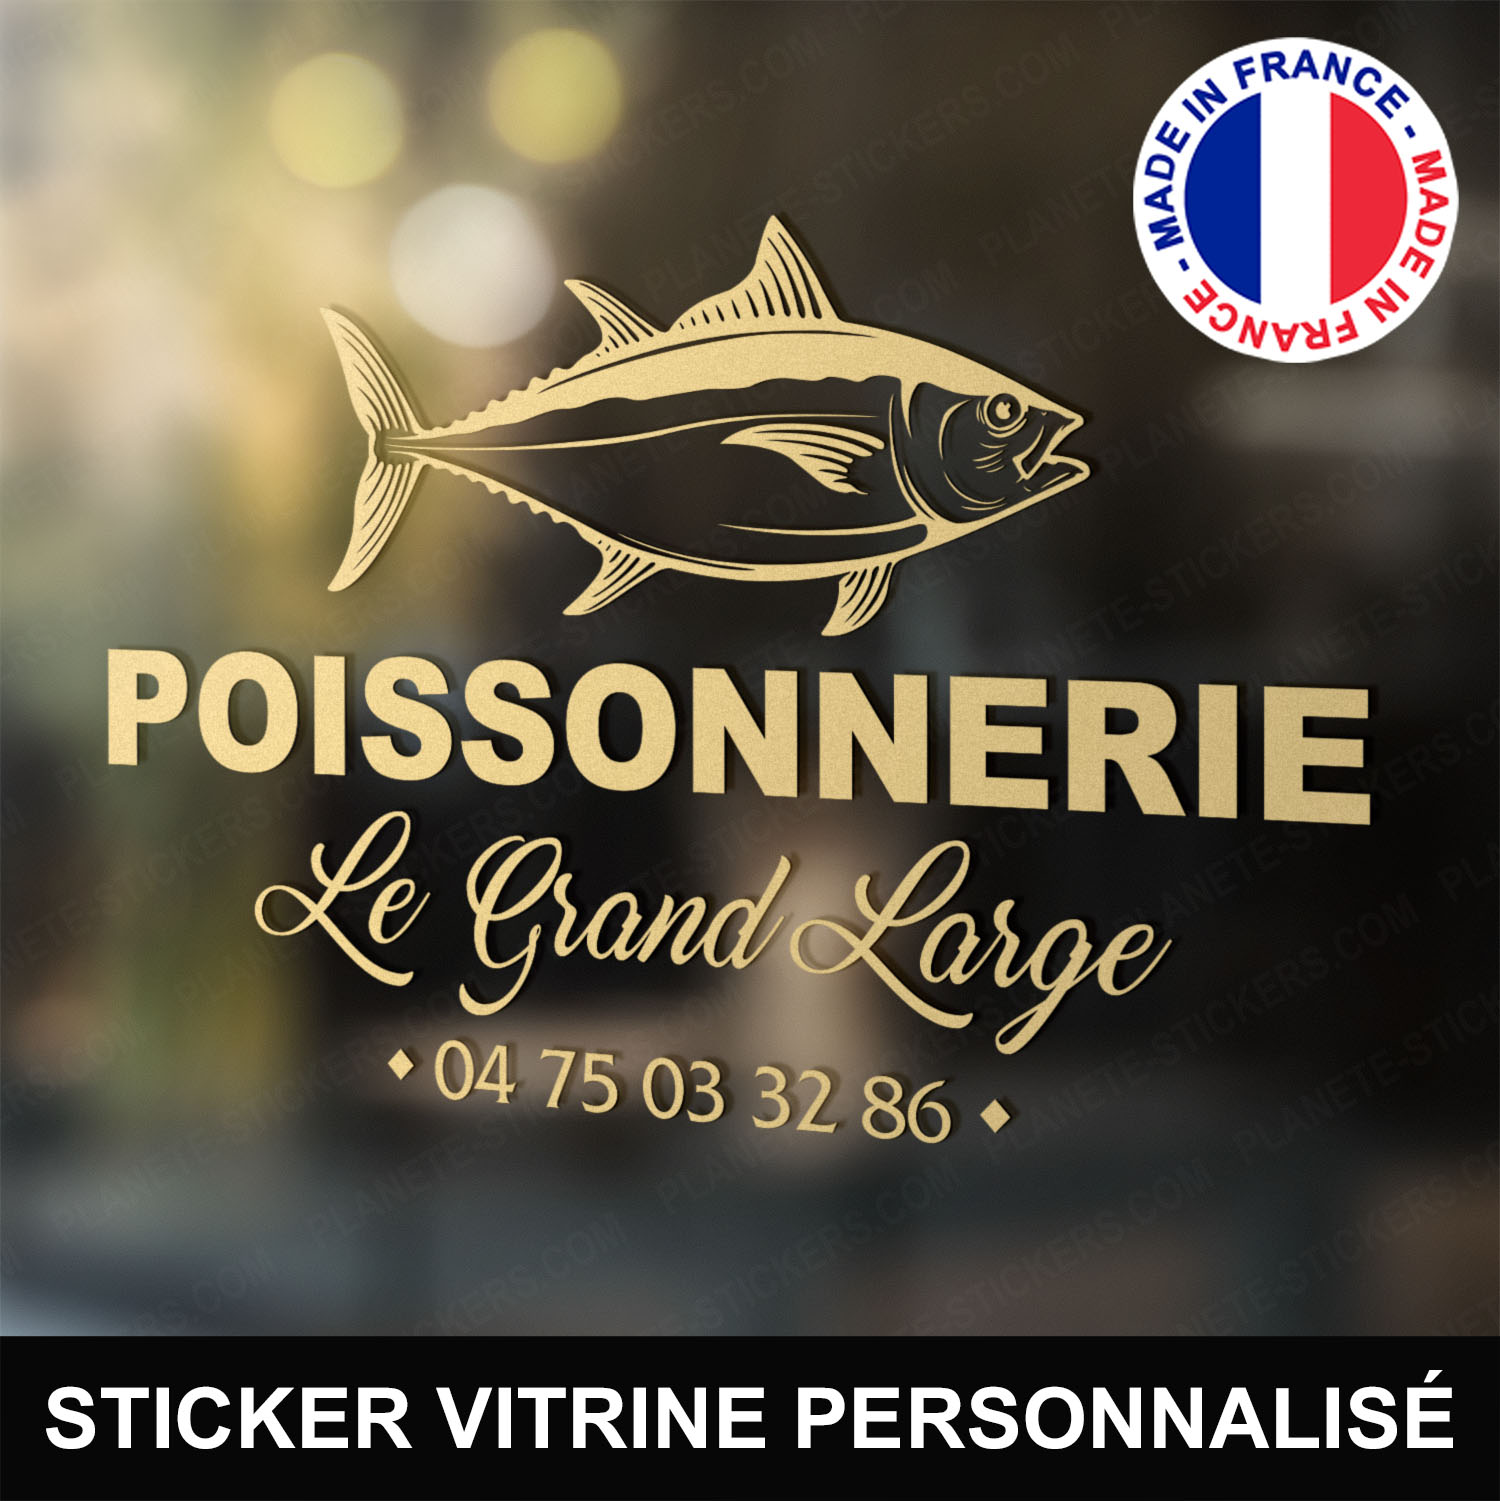 ref4poissonnerievitrine-stickers-poissonnerie-vitrine-sticker-personnalisé-autocollant-poissonnier-pro-vitre-poisson-professionnel-logo-thon